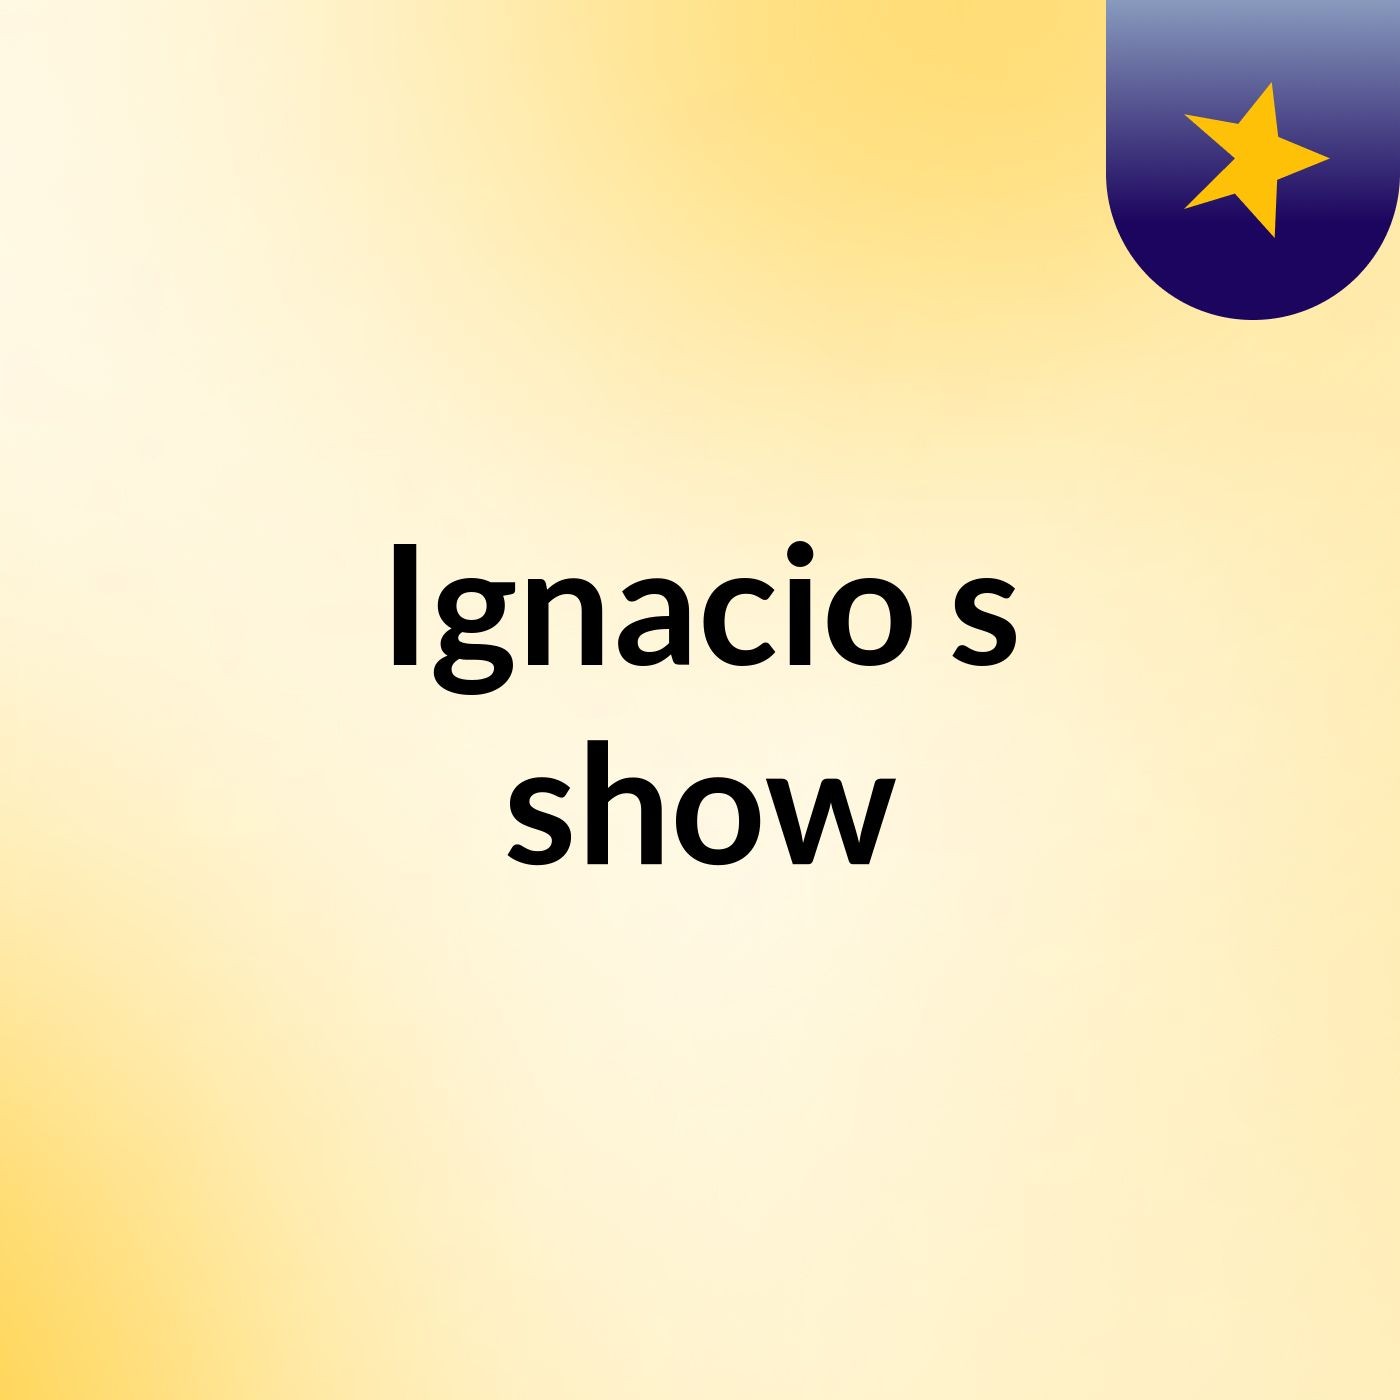 Ignacio's show